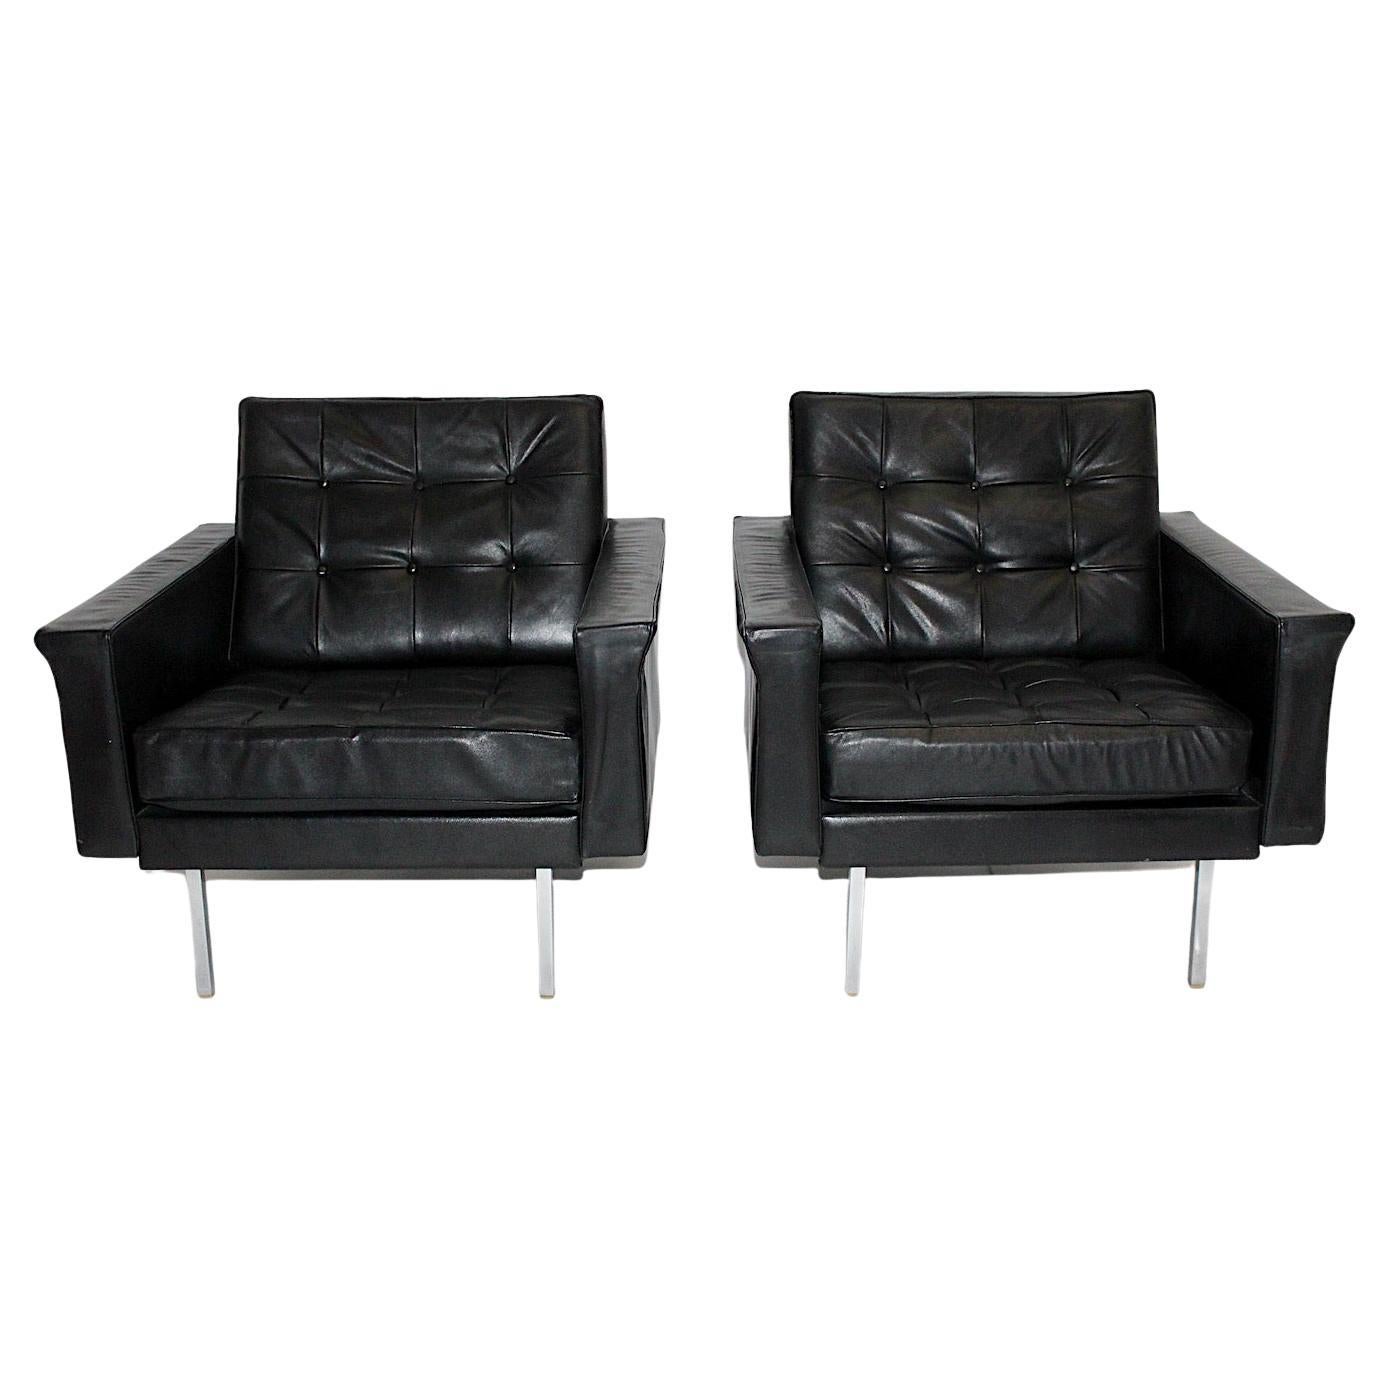 Mid-Century Modern Vintage Black Leather Pair Club Chairs Johannes Spalt, 1960s For Sale